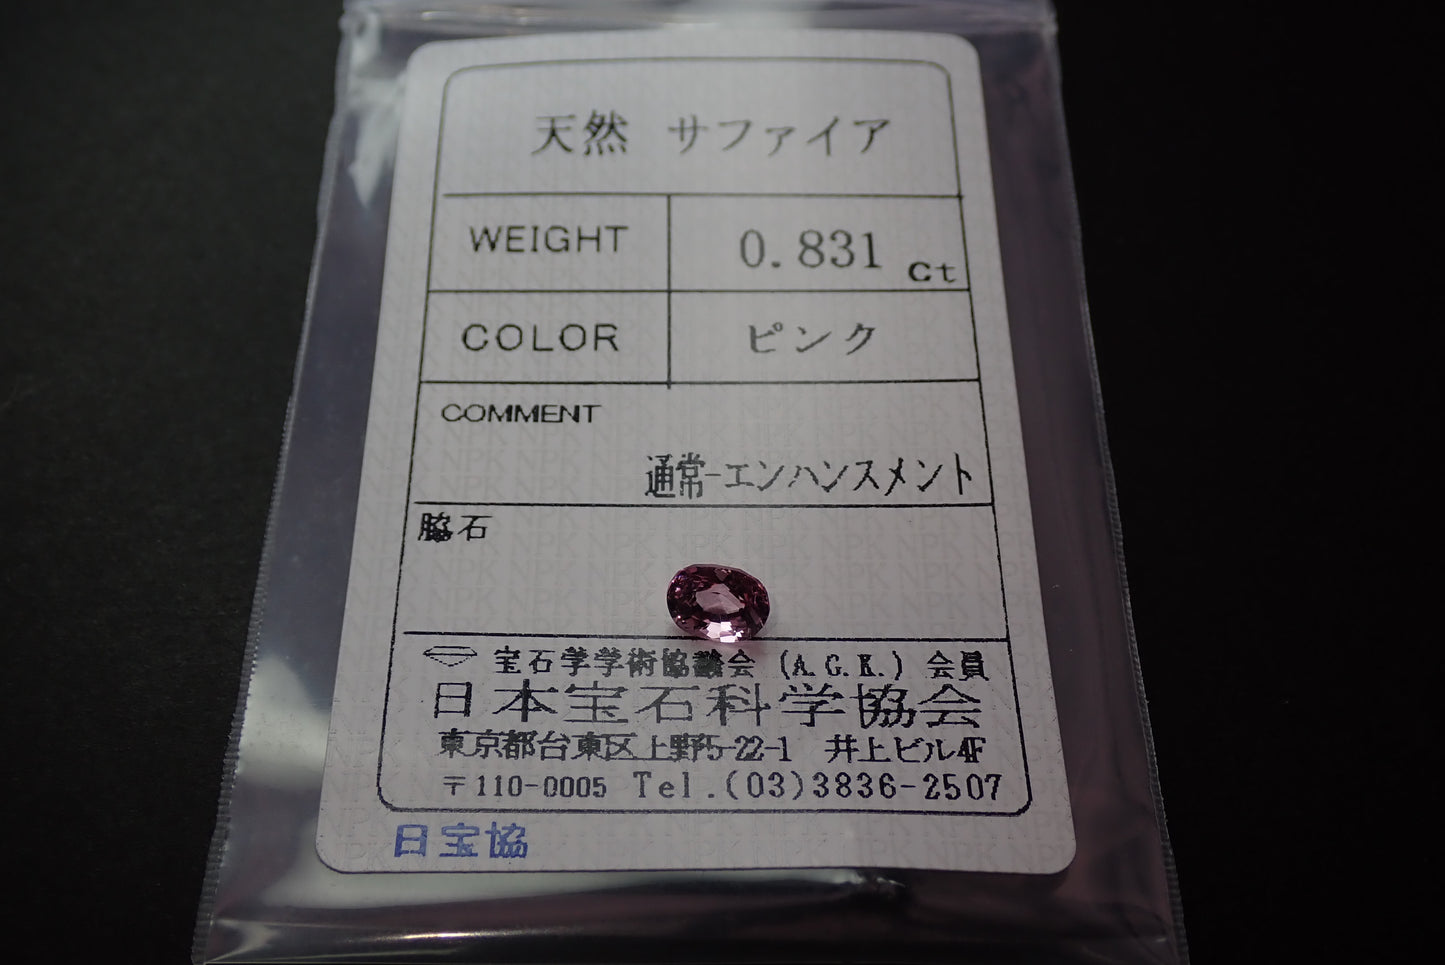 Pink sapphire 0.831ct